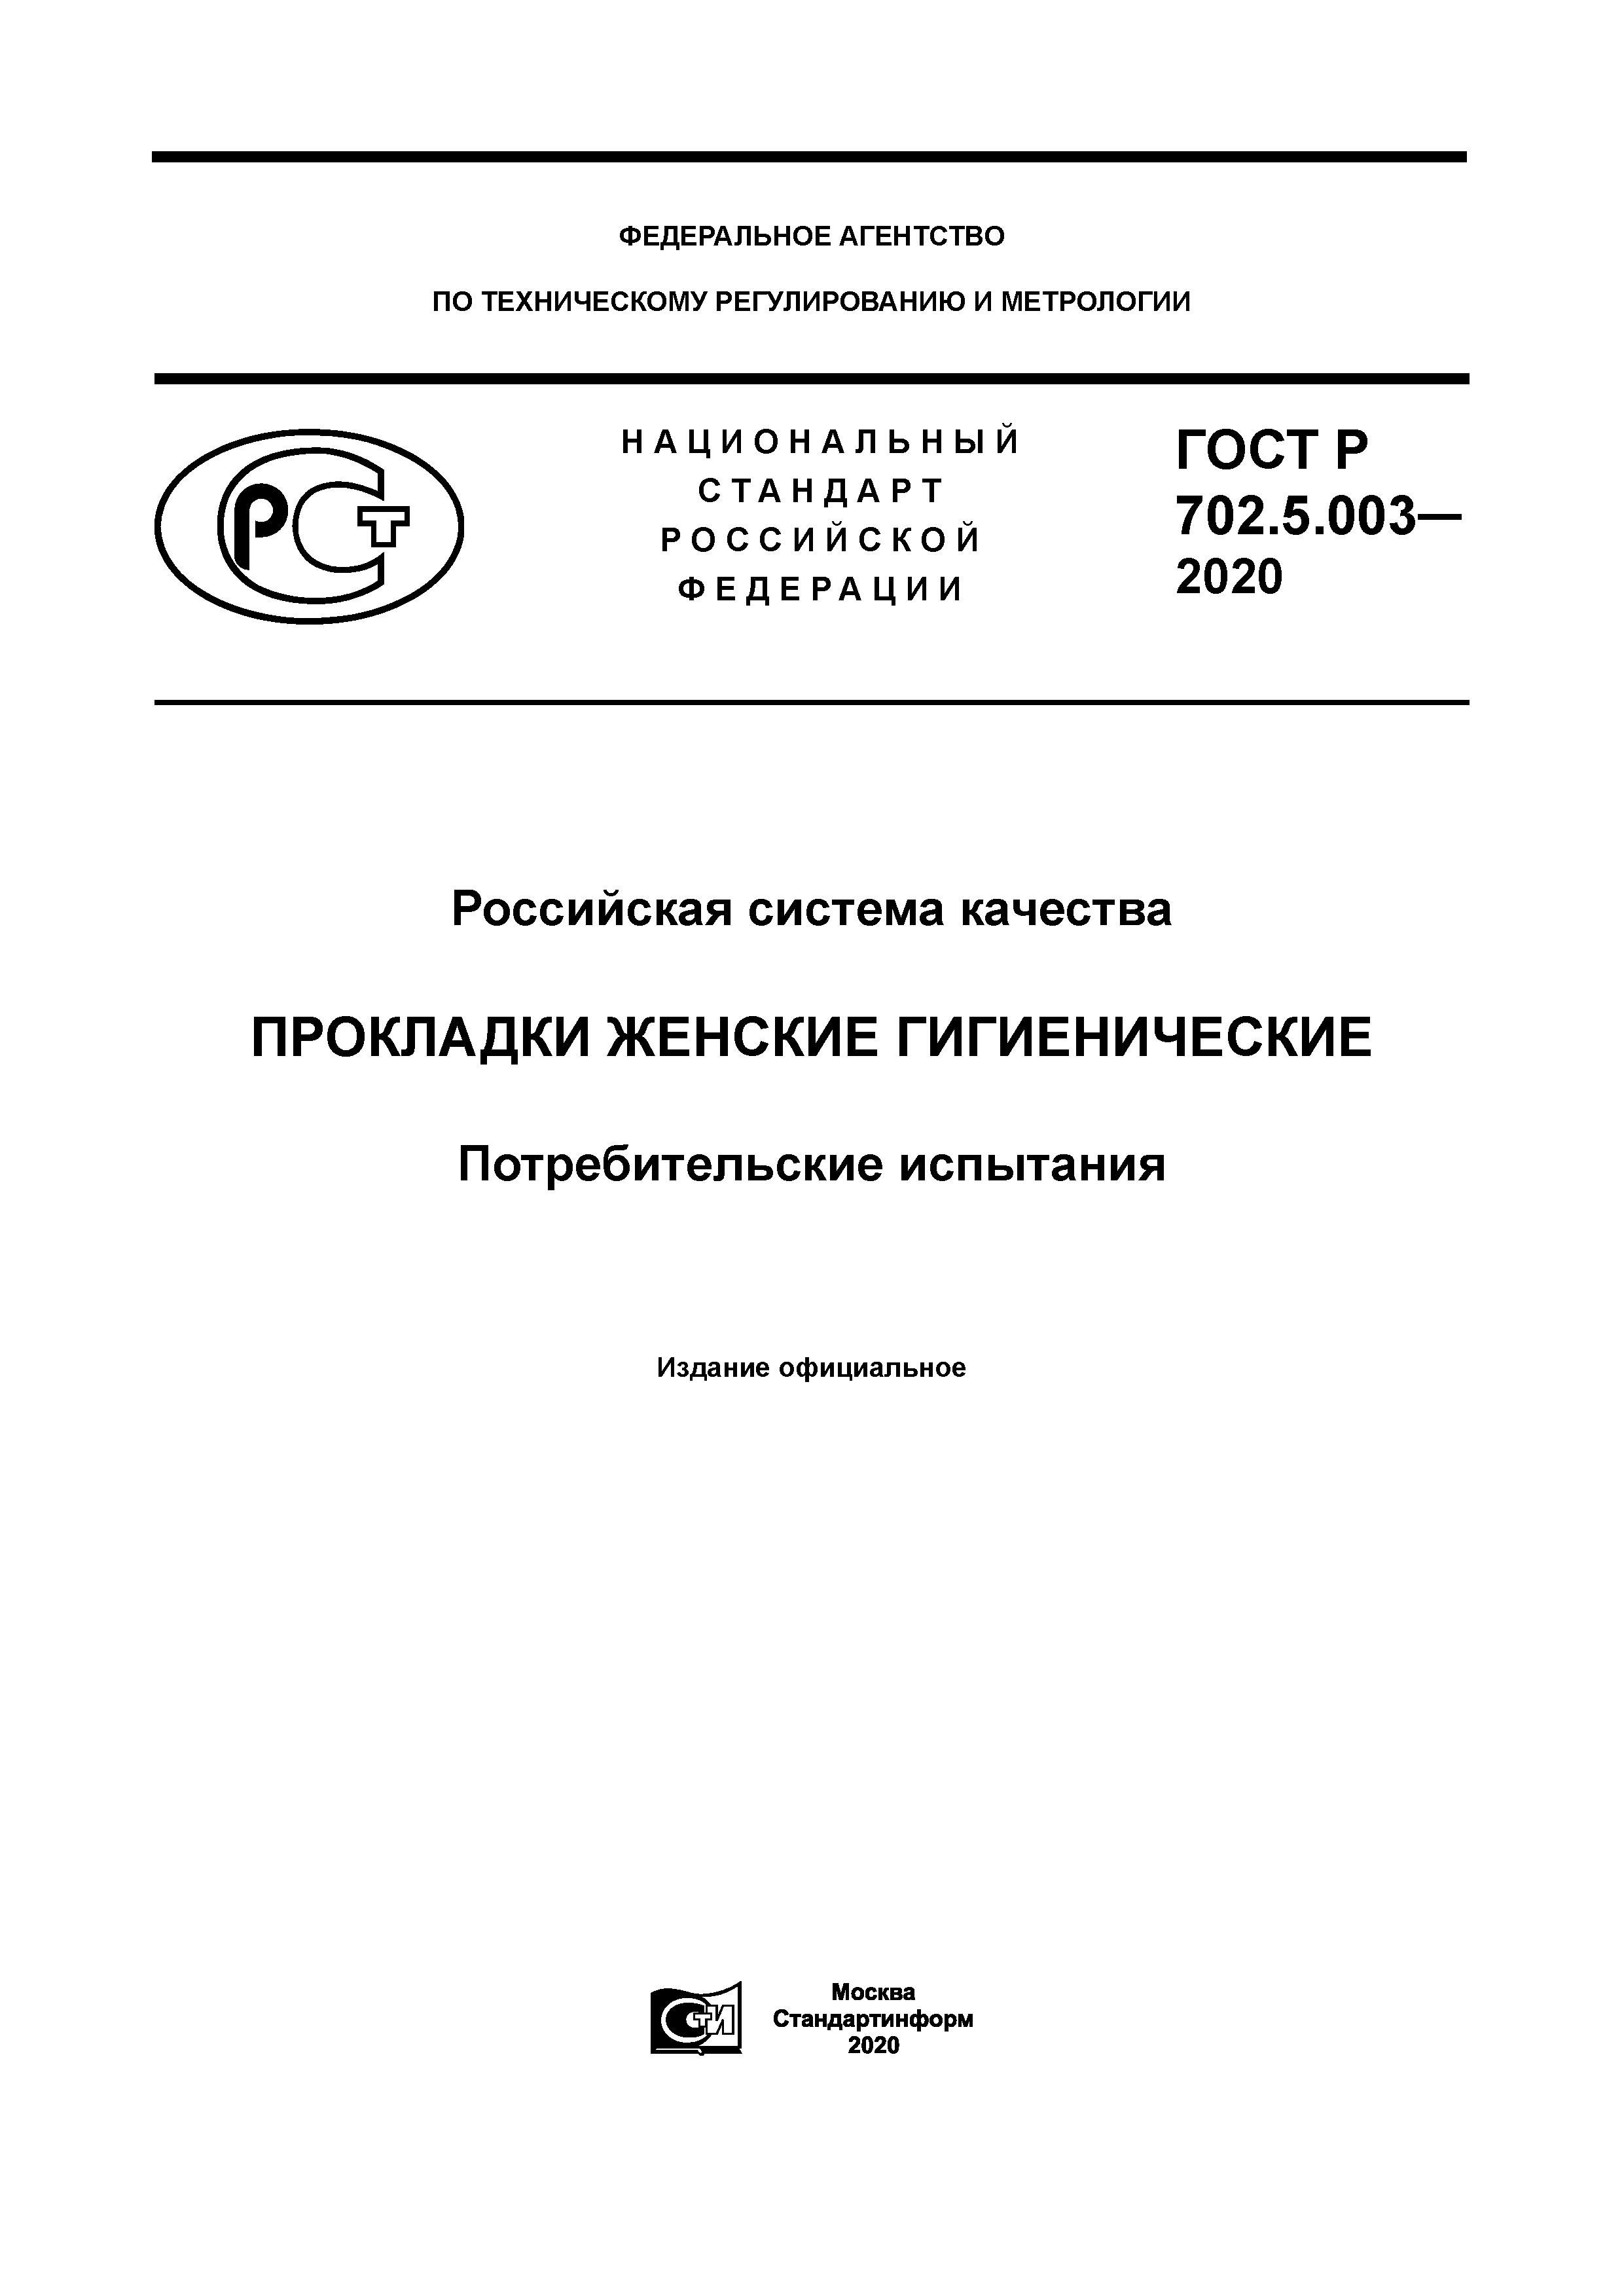 ГОСТ Р 702.5.003-2020